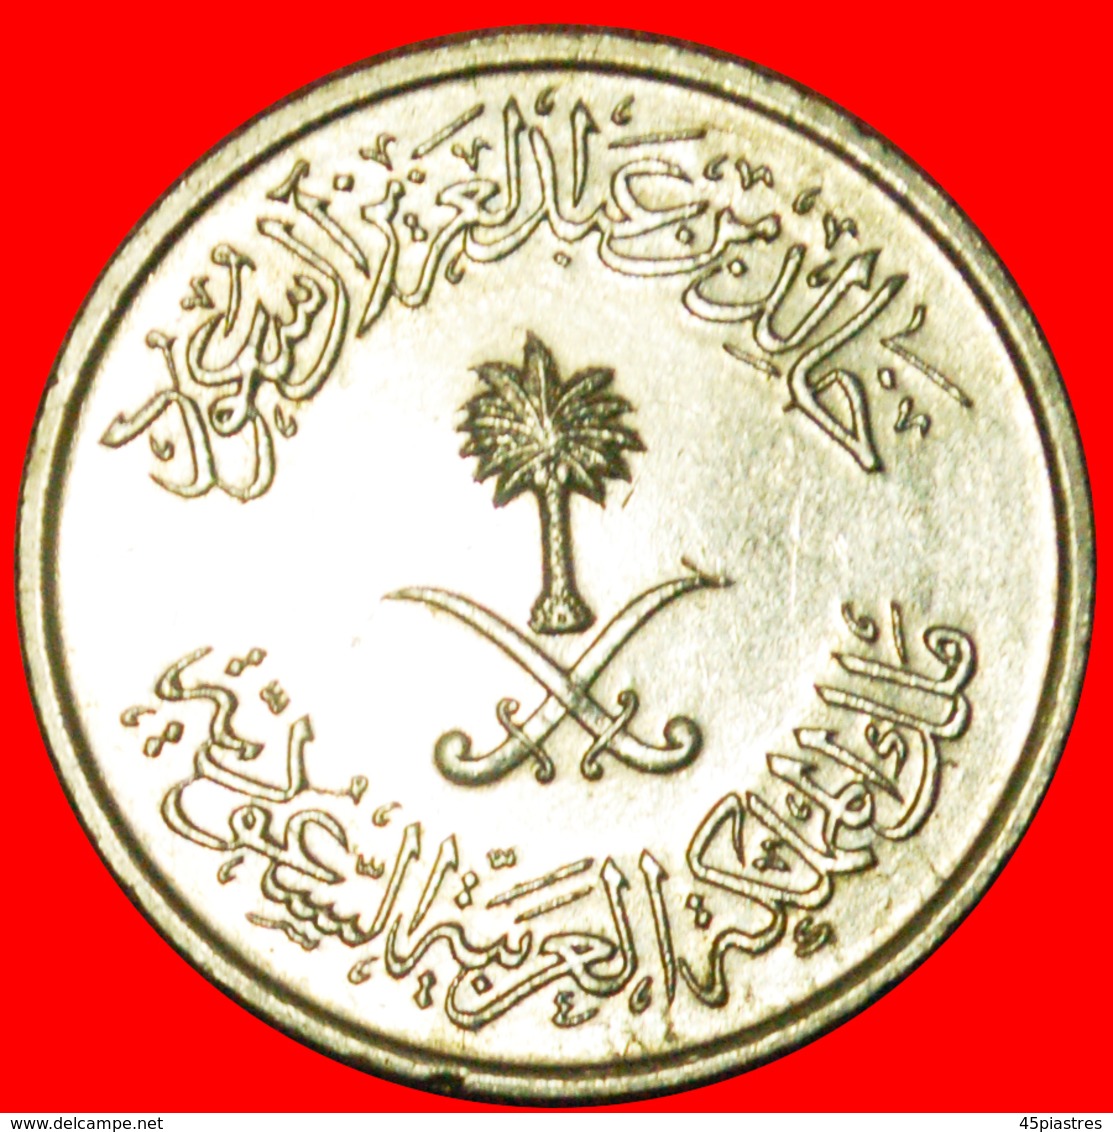 # DAGGERS AND PALMTREE: SAUDI ARABIA ★ 25 HALALA / 1/4  RIYAL 1400 (1980) MINT LUSTER! LOW START ★ NO RESERVE! - Saudi Arabia